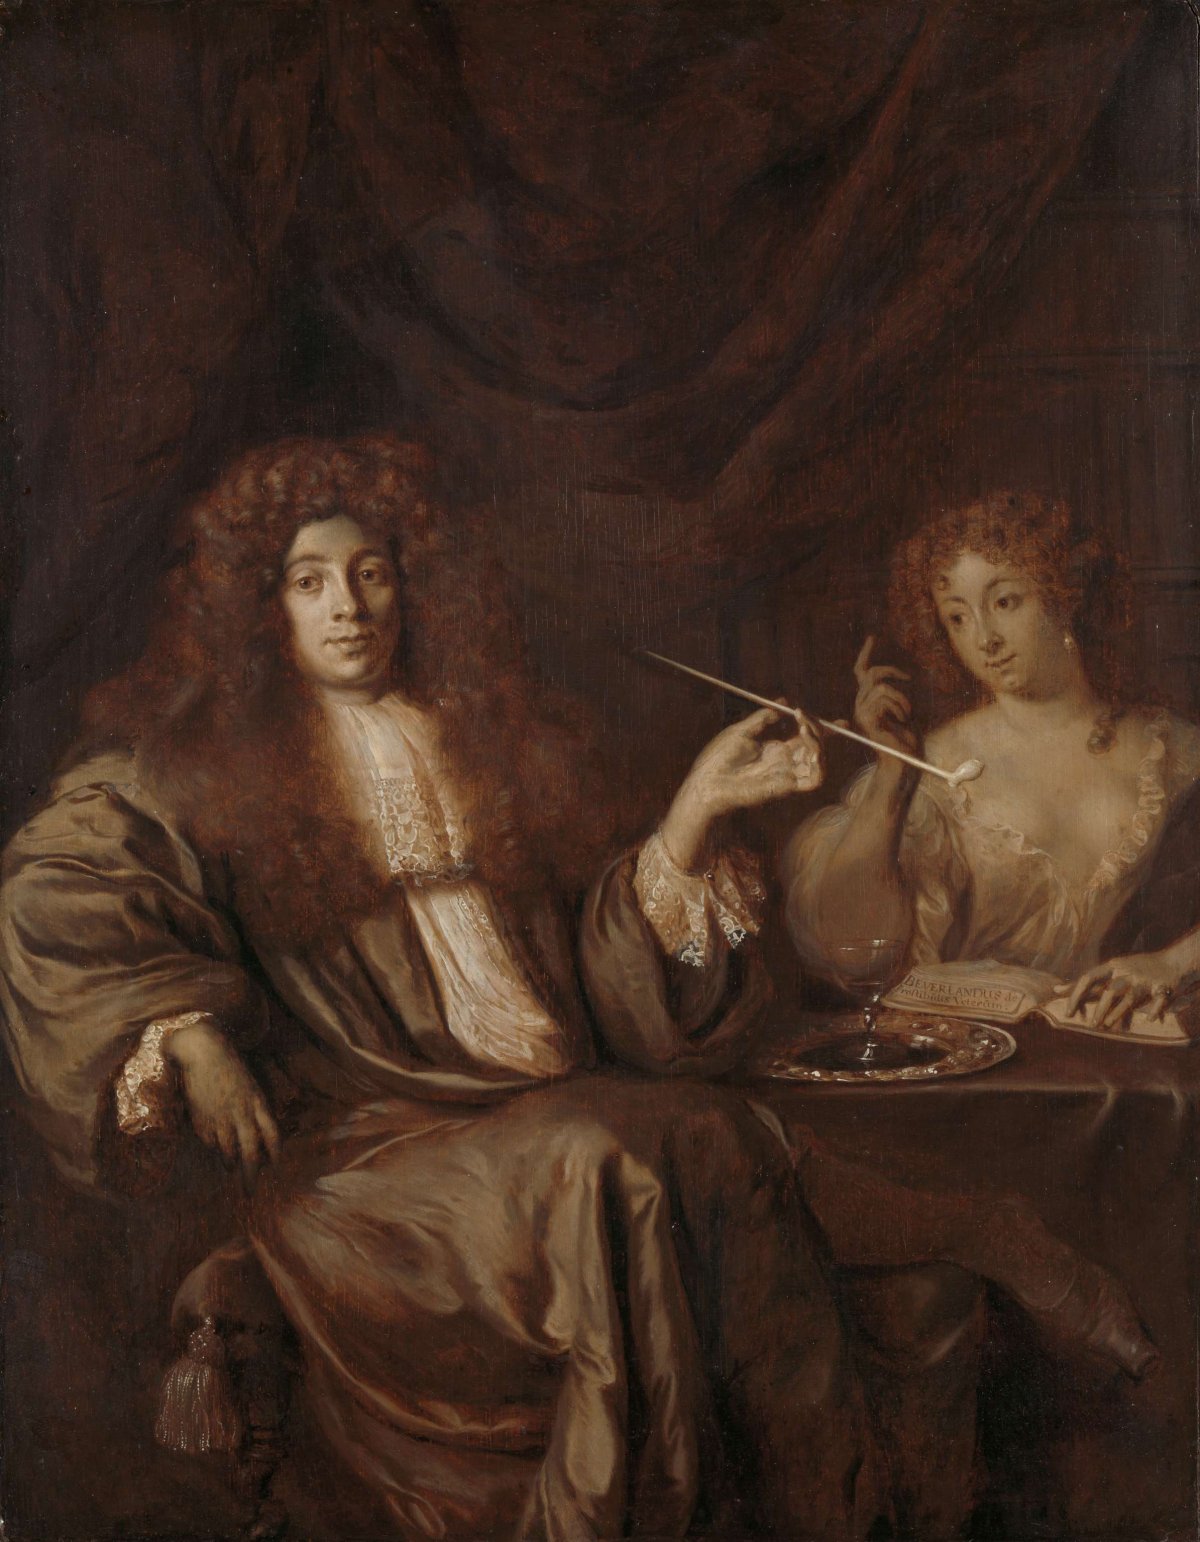 Portrait of Hadriaan Beverland with a Prostitute, Ary de Vois, c. 1676